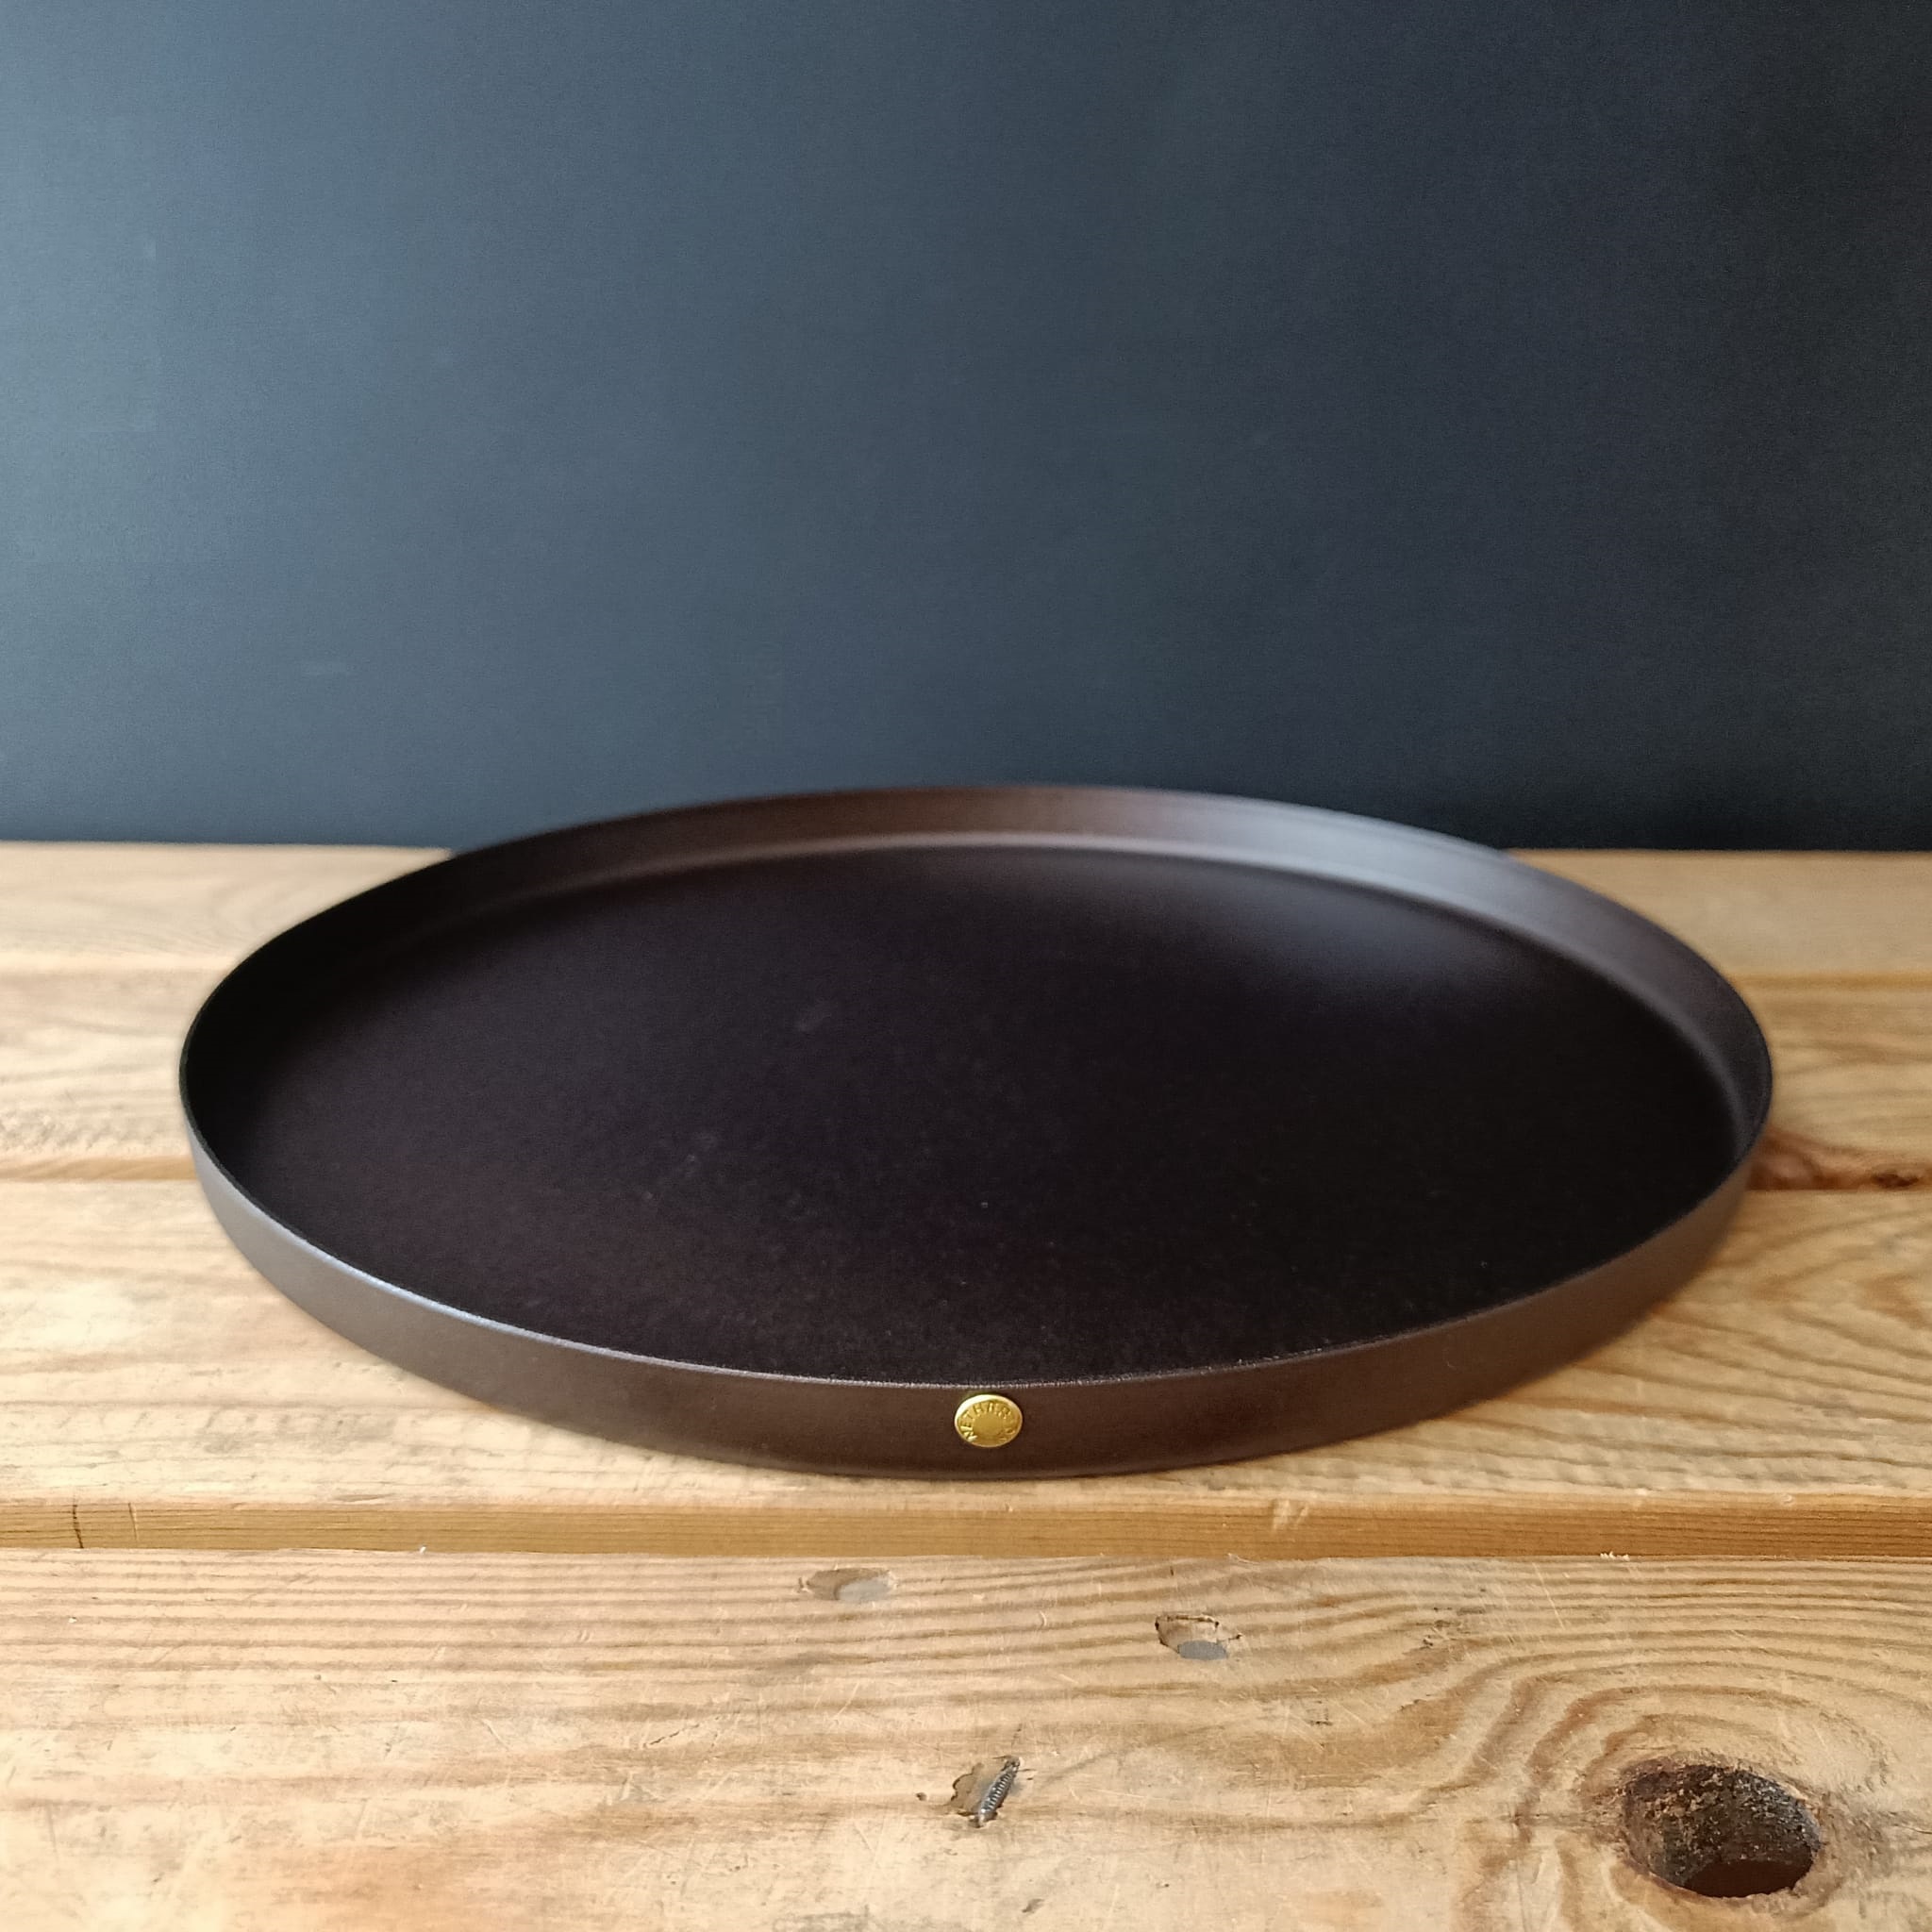 Spun Iron Baking Cloche, a cooking bell & 12inch (31cm) baking tray